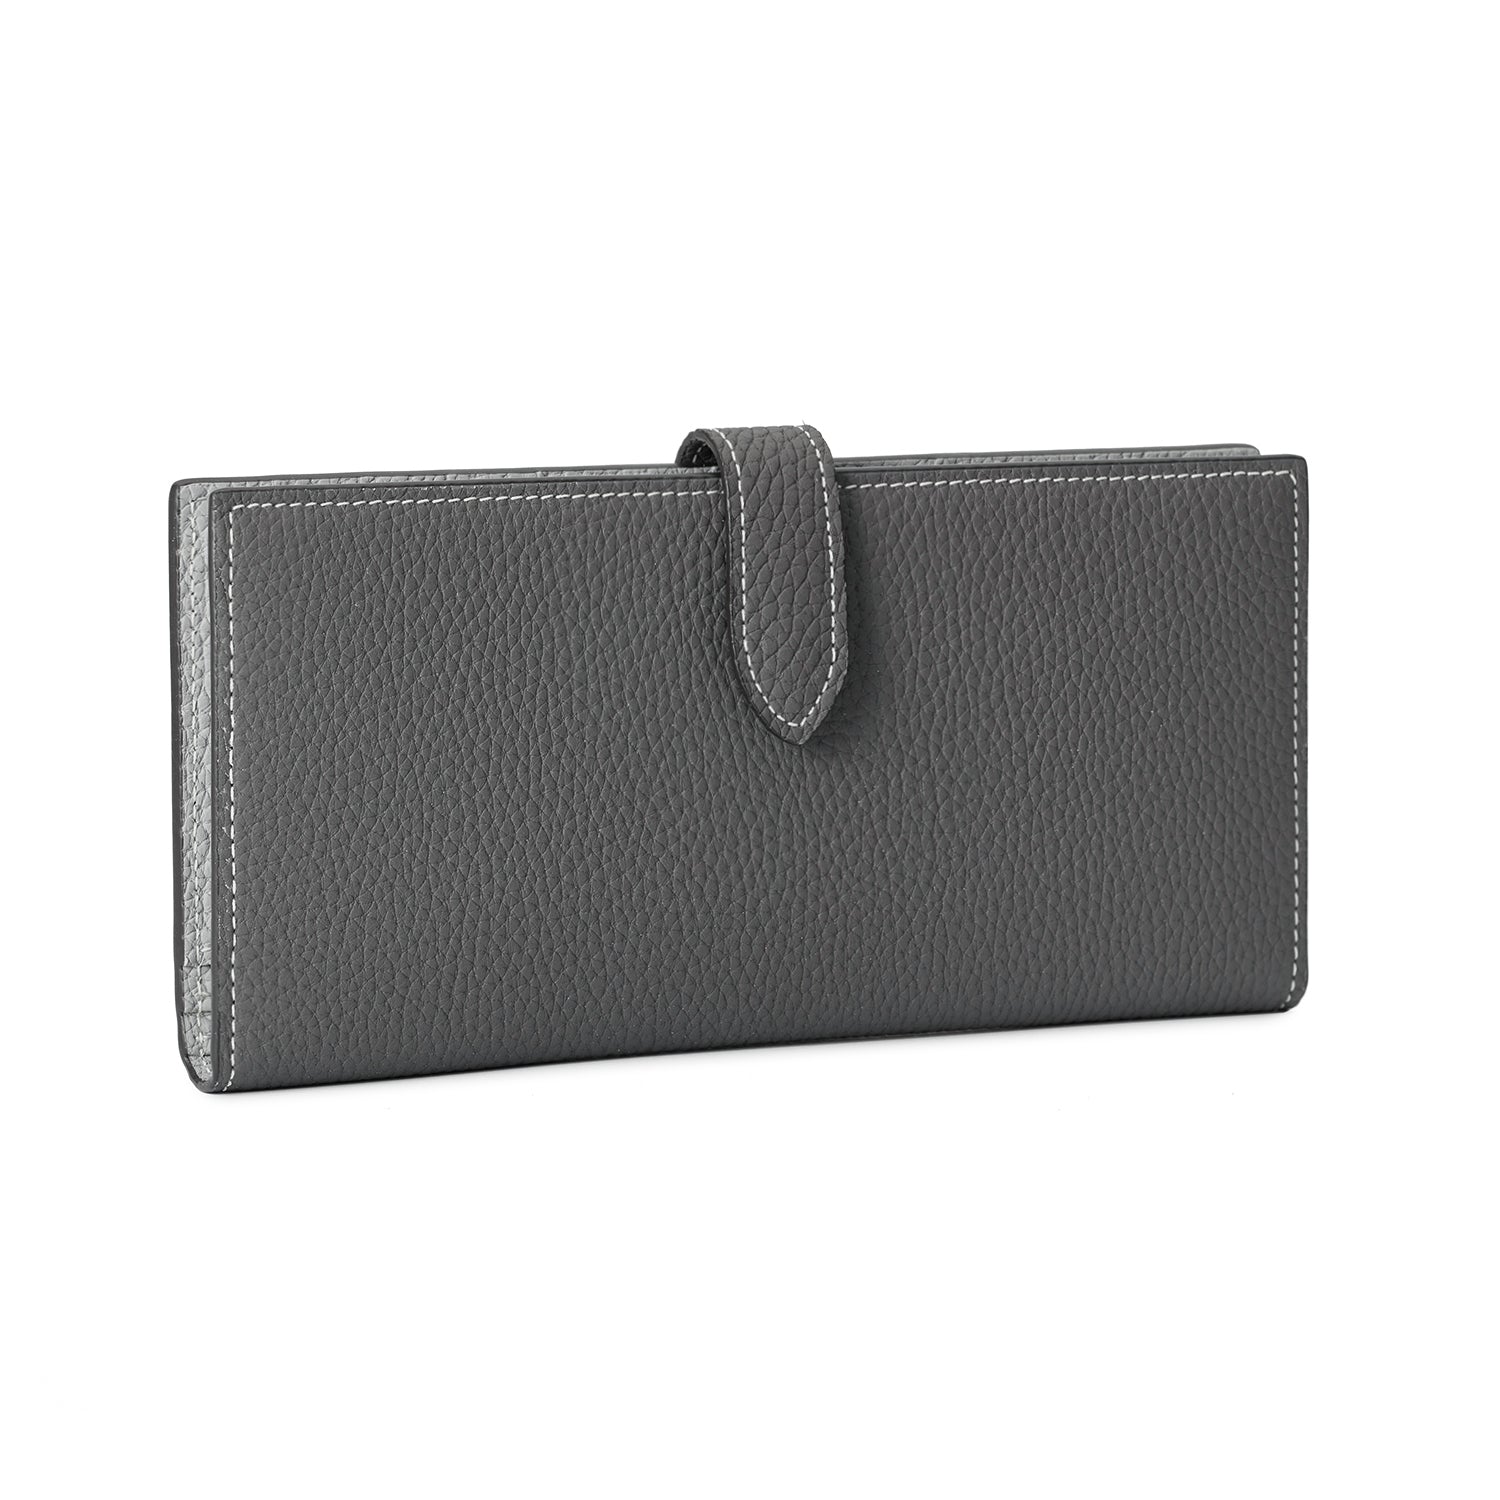 Belted long wallet in shrink leather